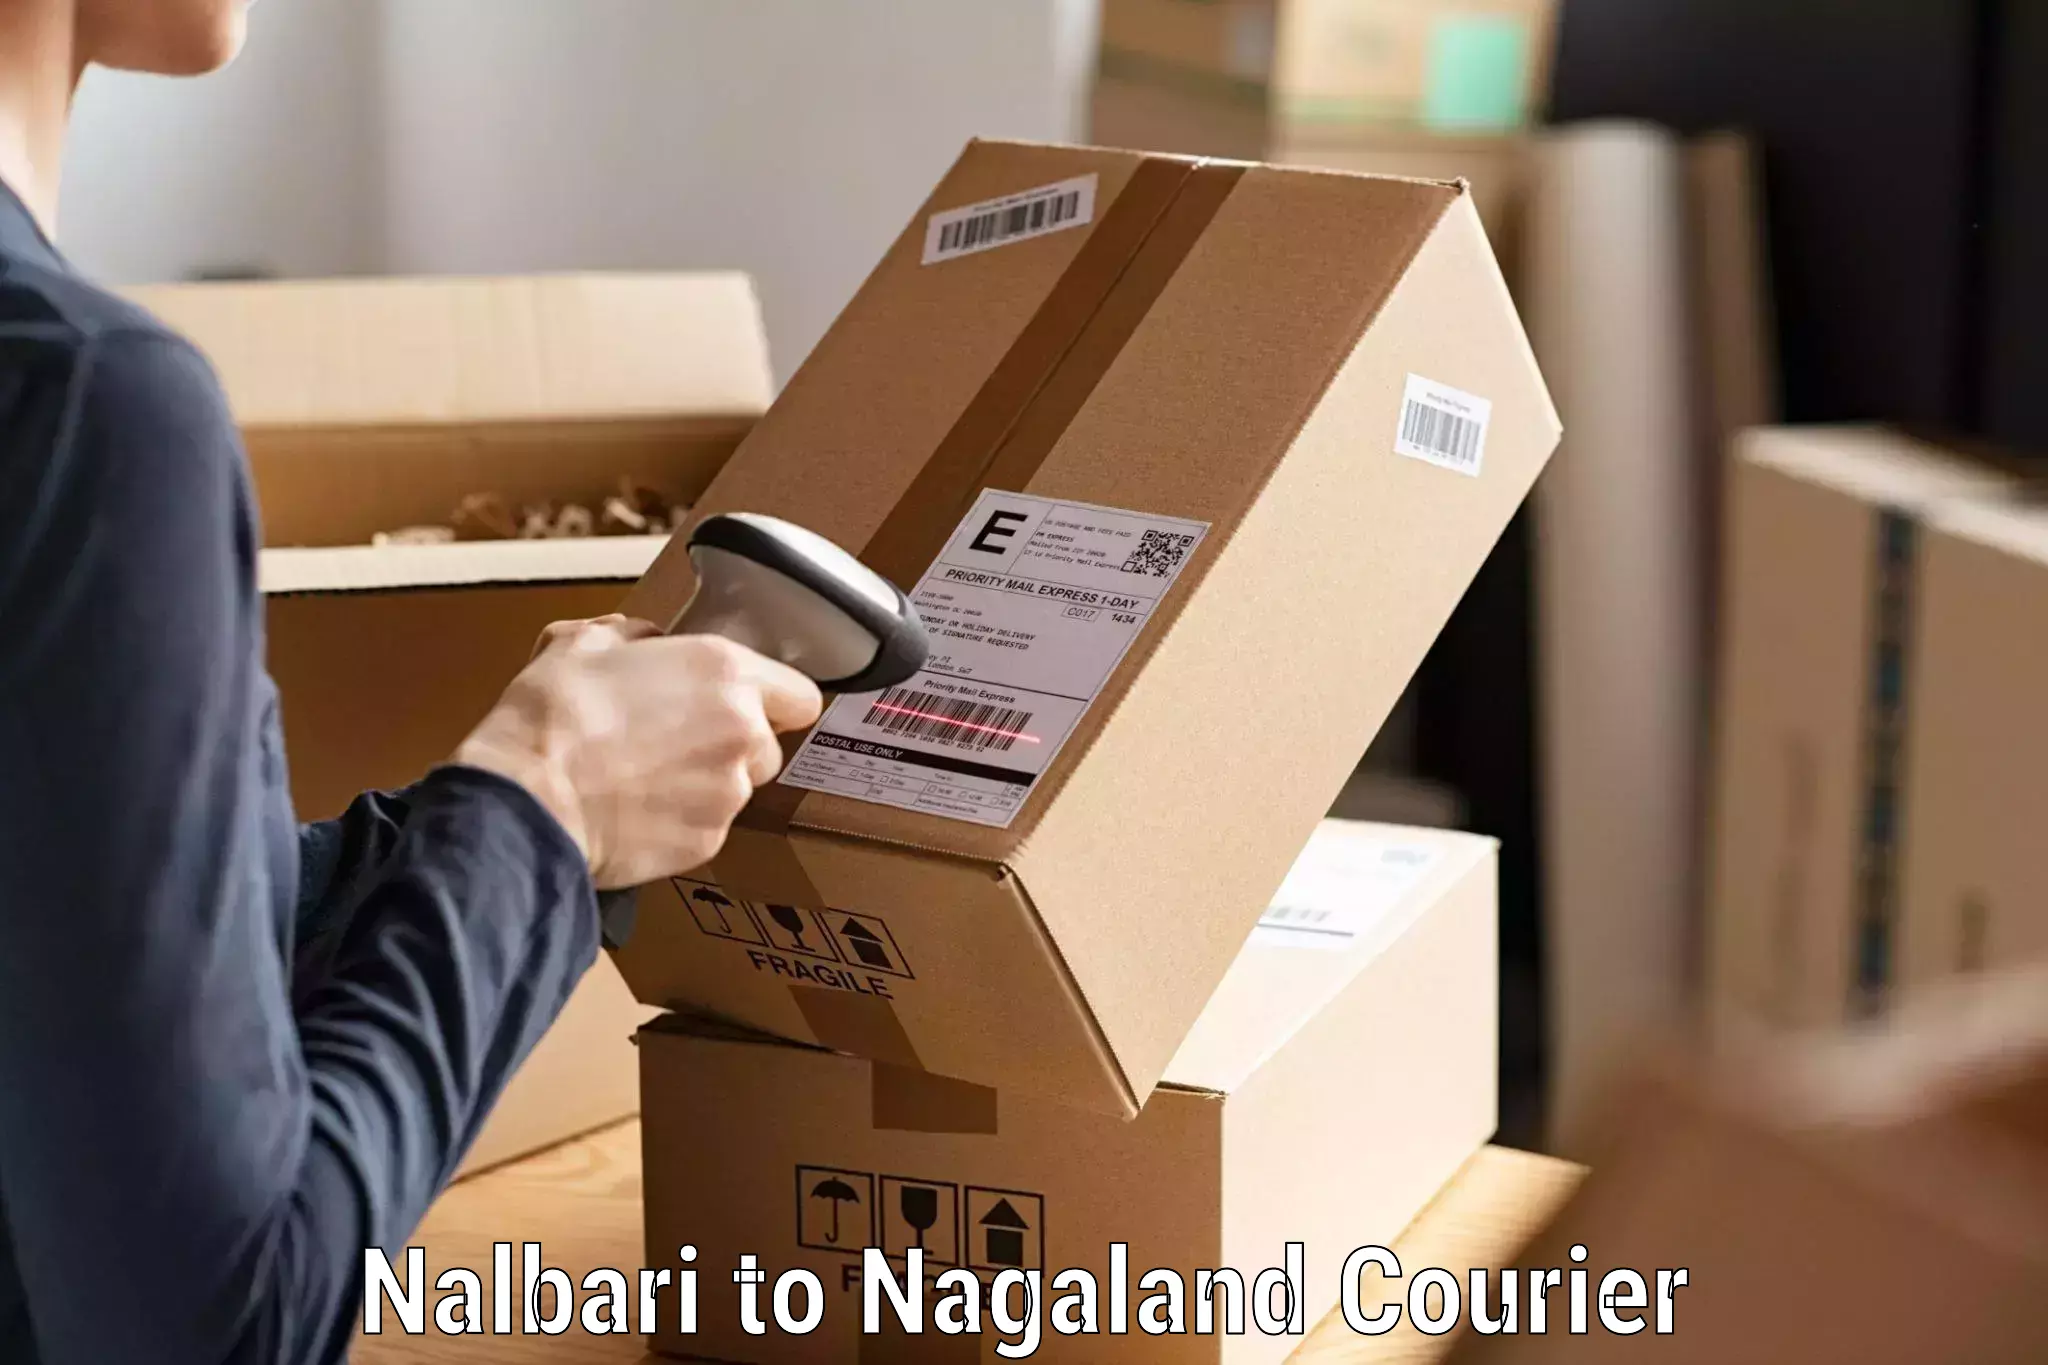 Advanced shipping network Nalbari to Kohima